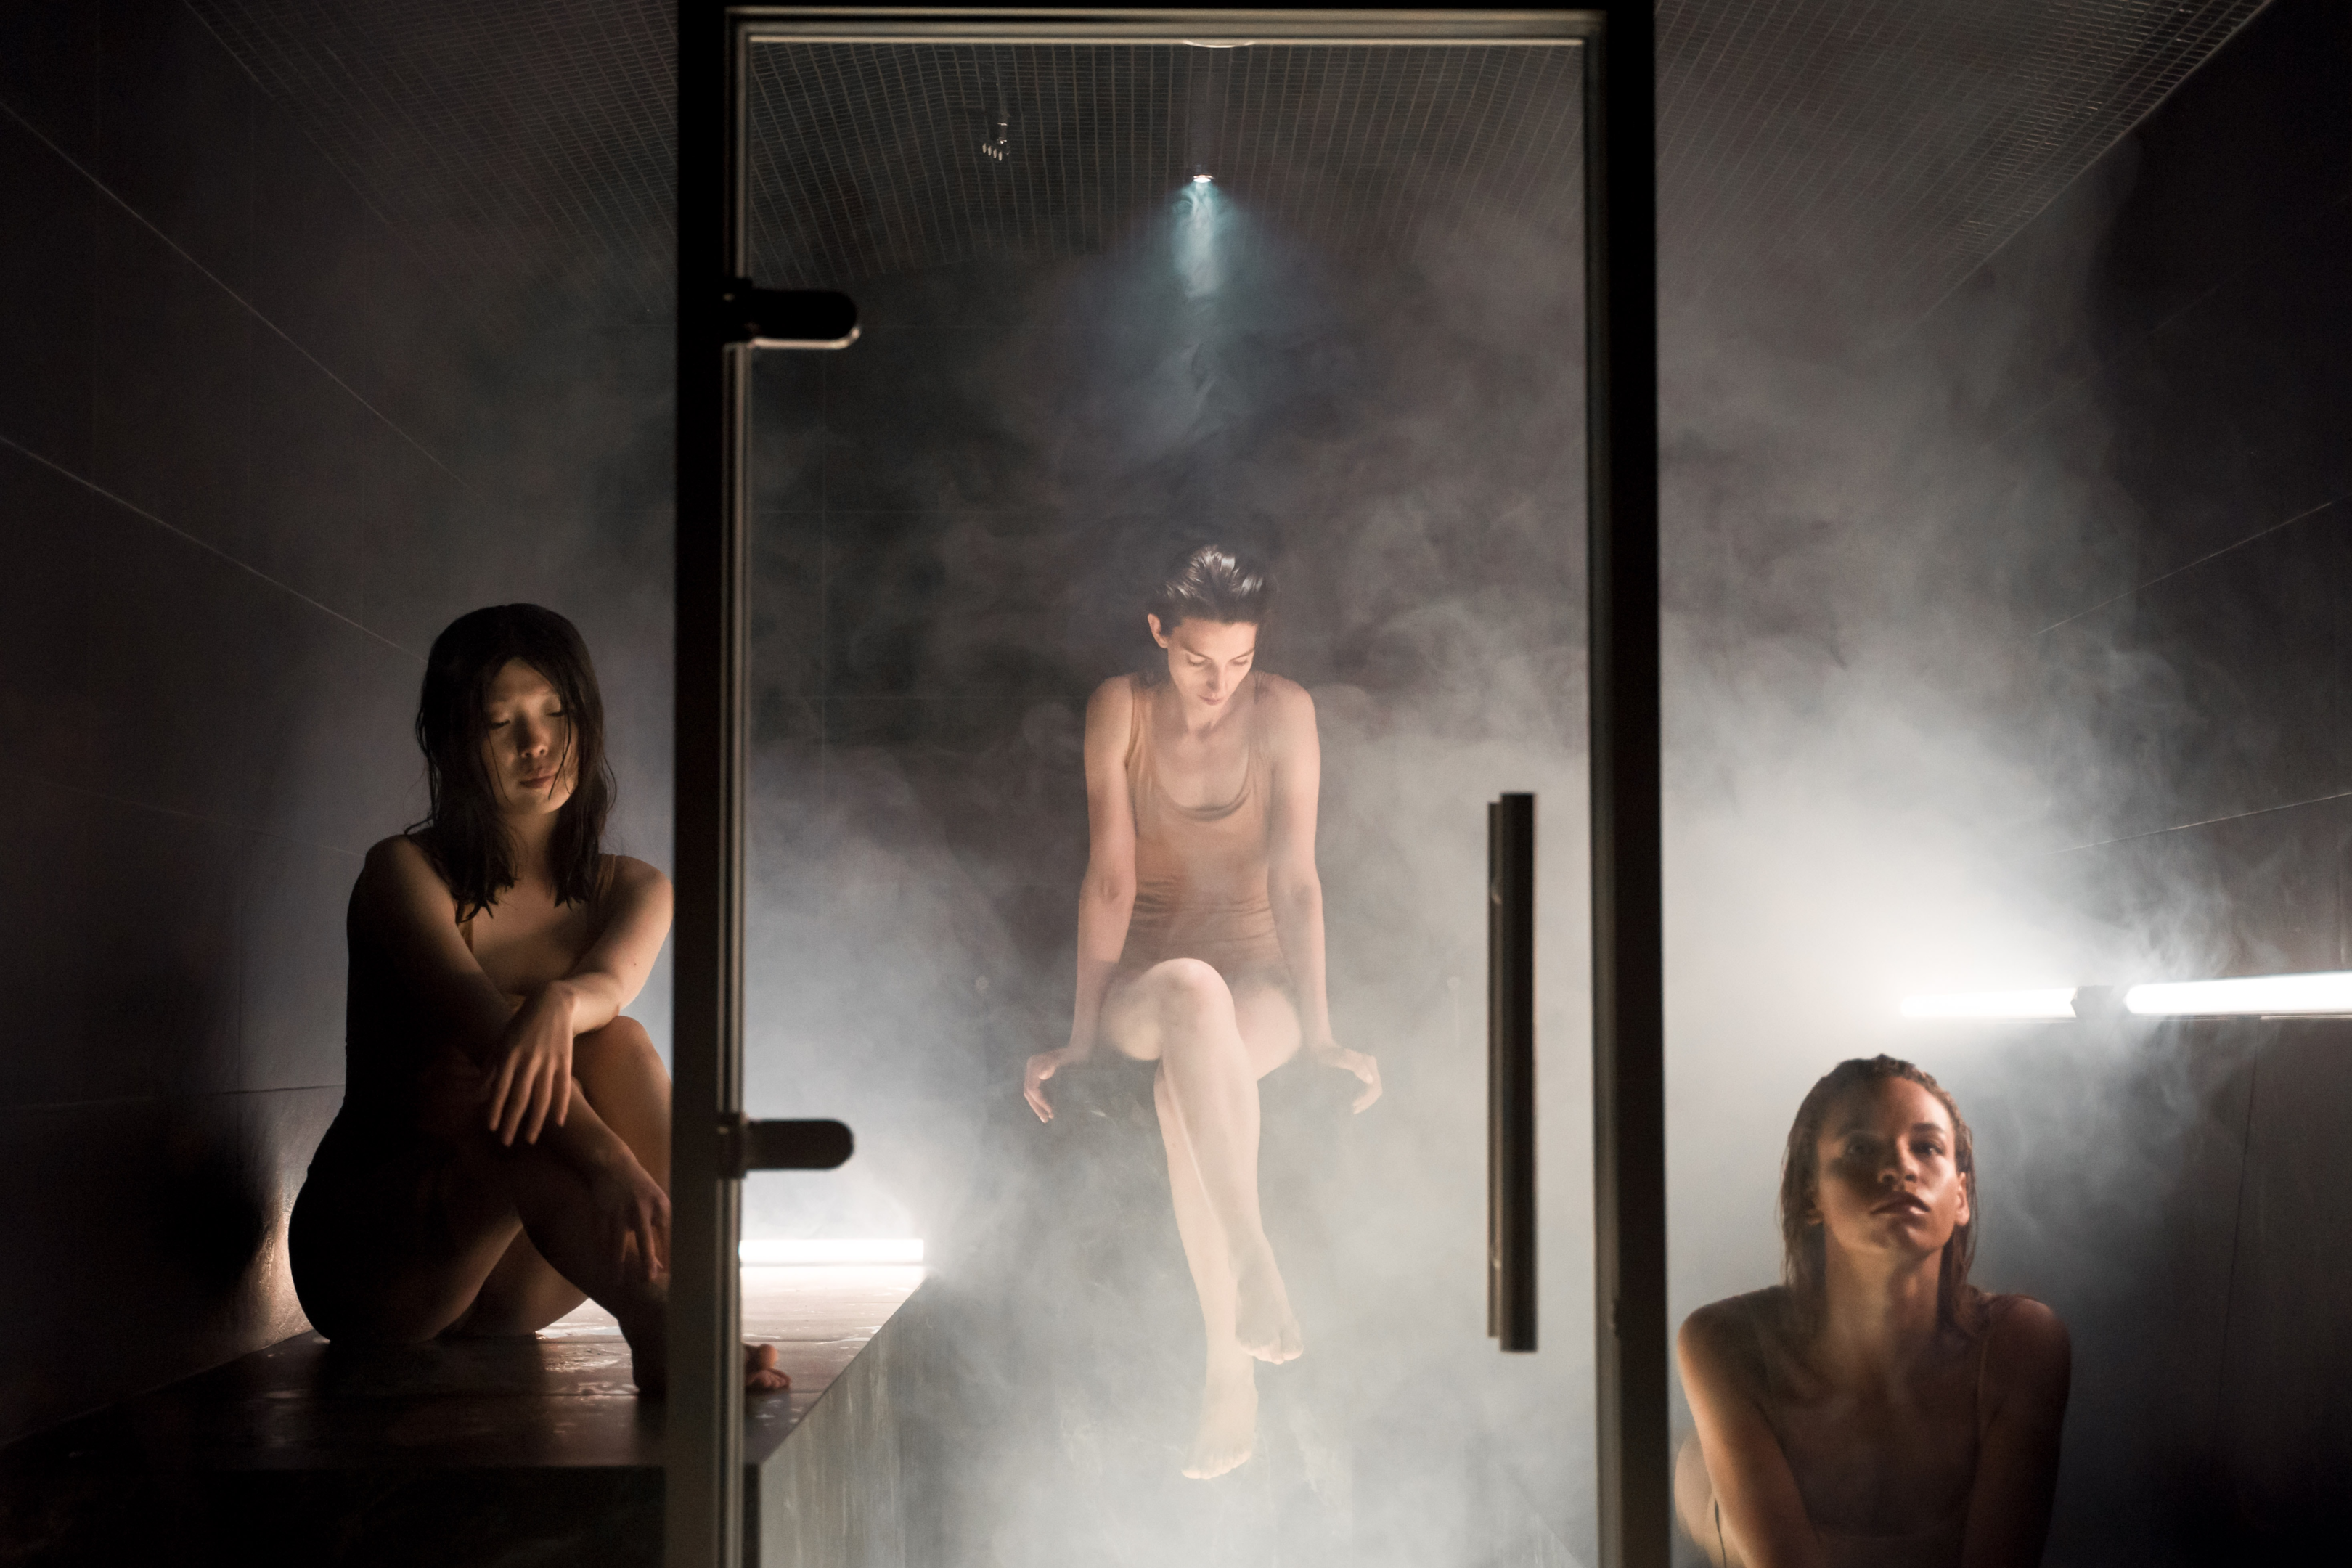 finnish sauna society steam baths high humid